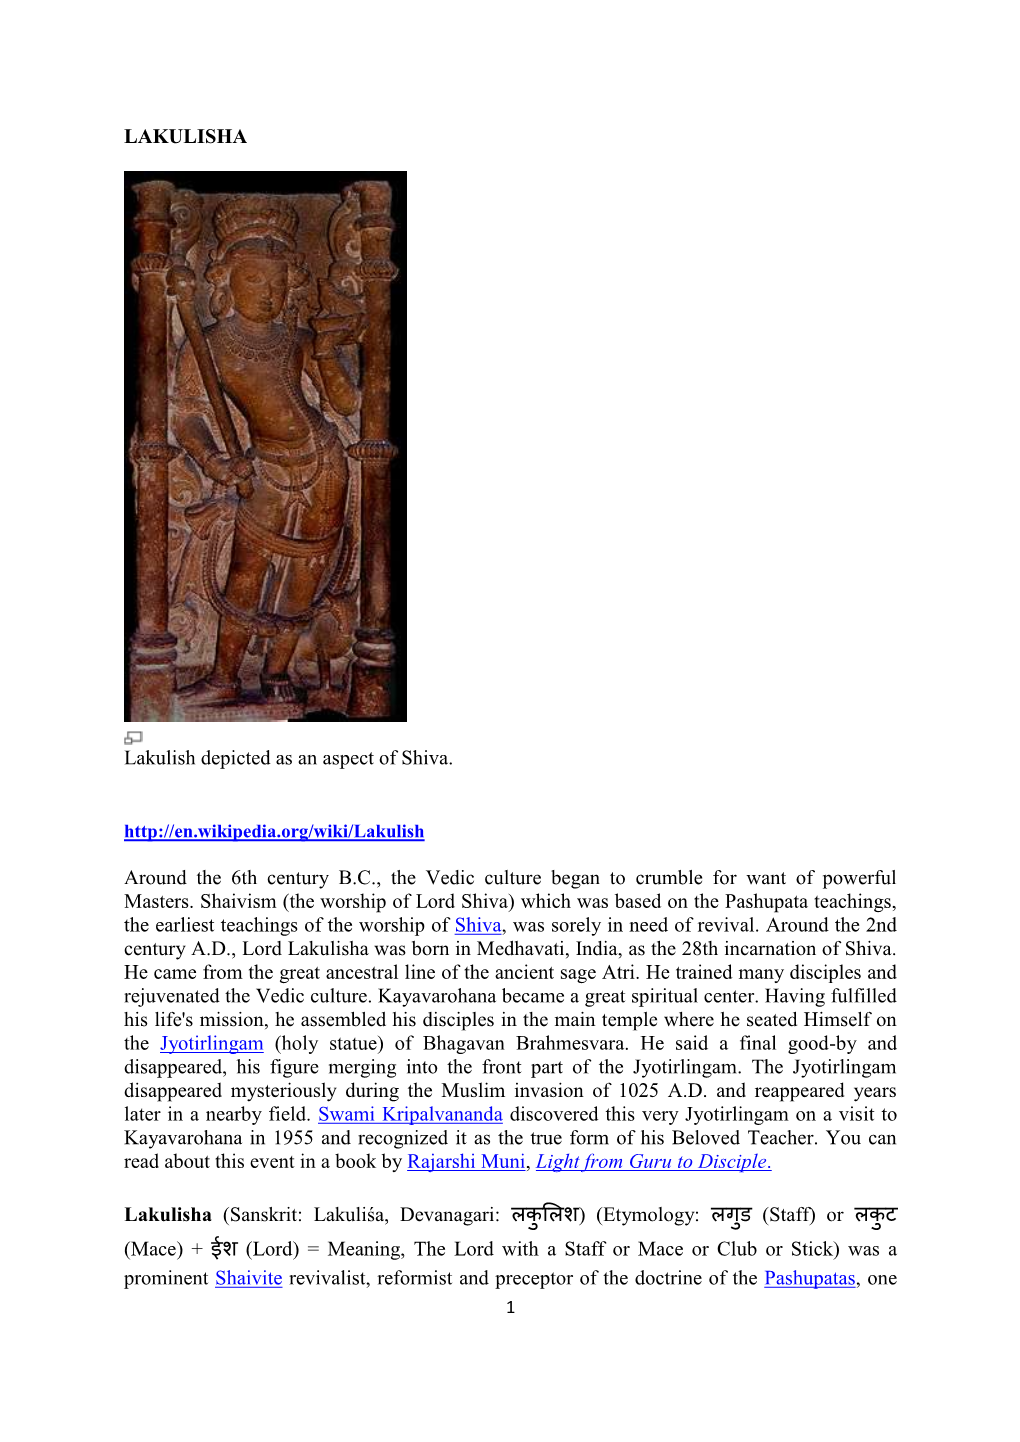 LAKULISHA Lakulish Depicted As an Aspect of Shiva. Around the 6Th